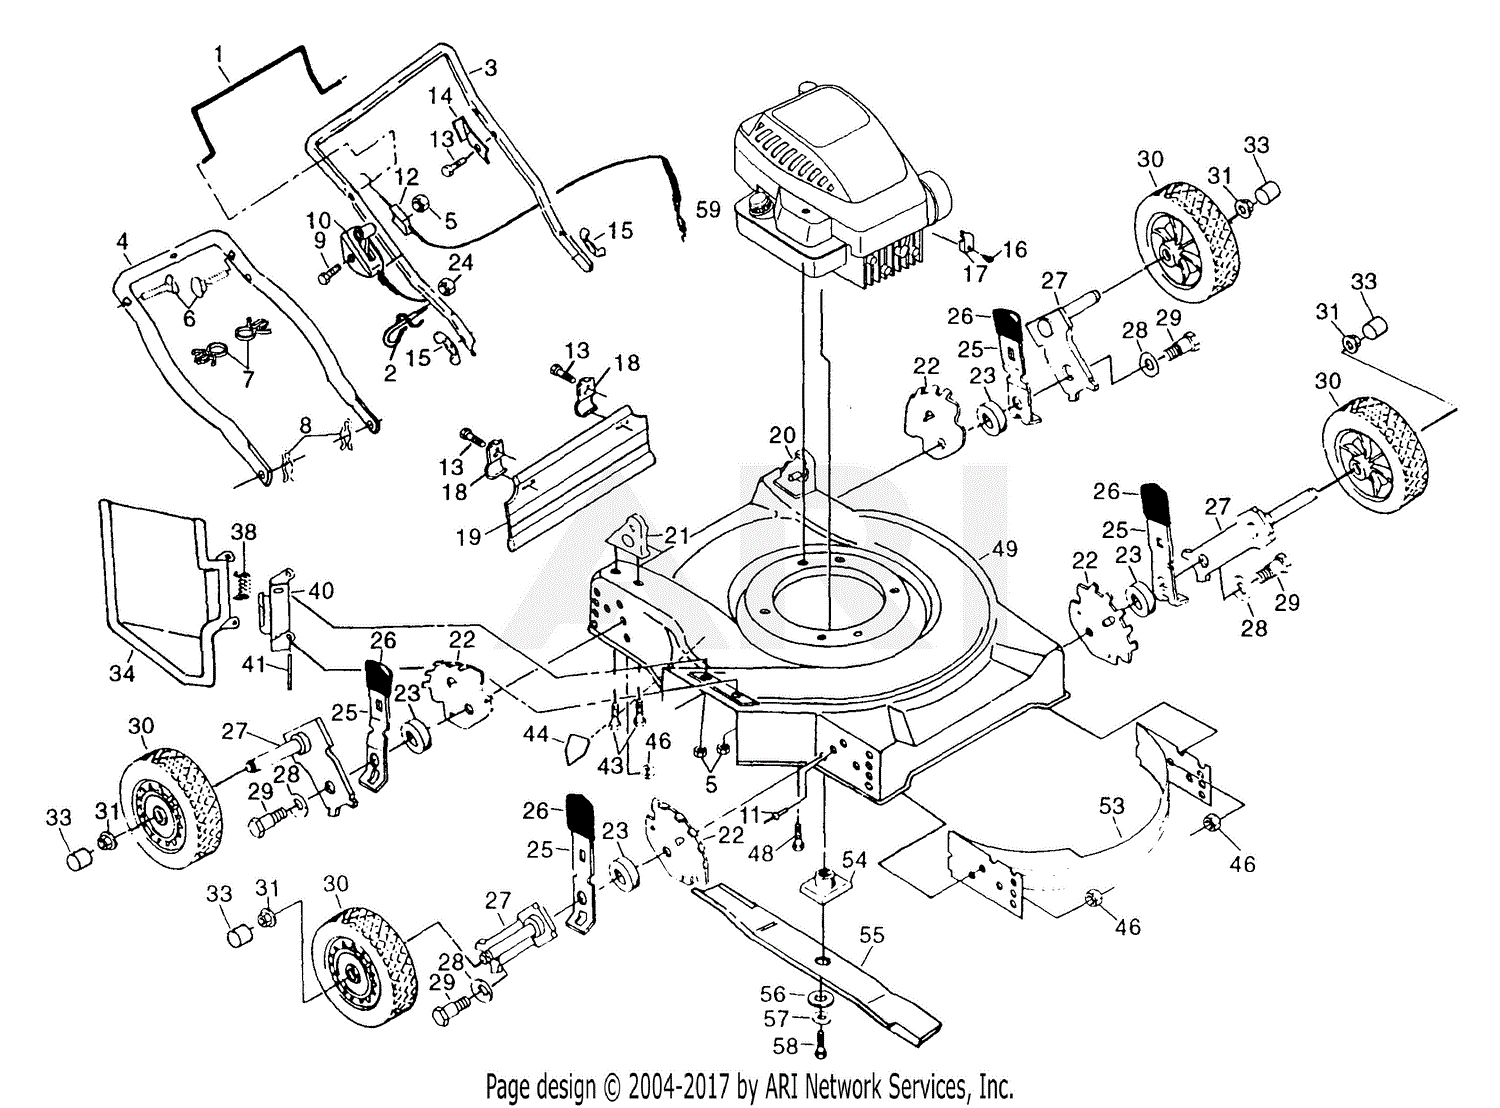 Craftsman Riding Lawn Mower Parts Diagram Lawn Mower Parts Diagram Wiring Diagram Directory